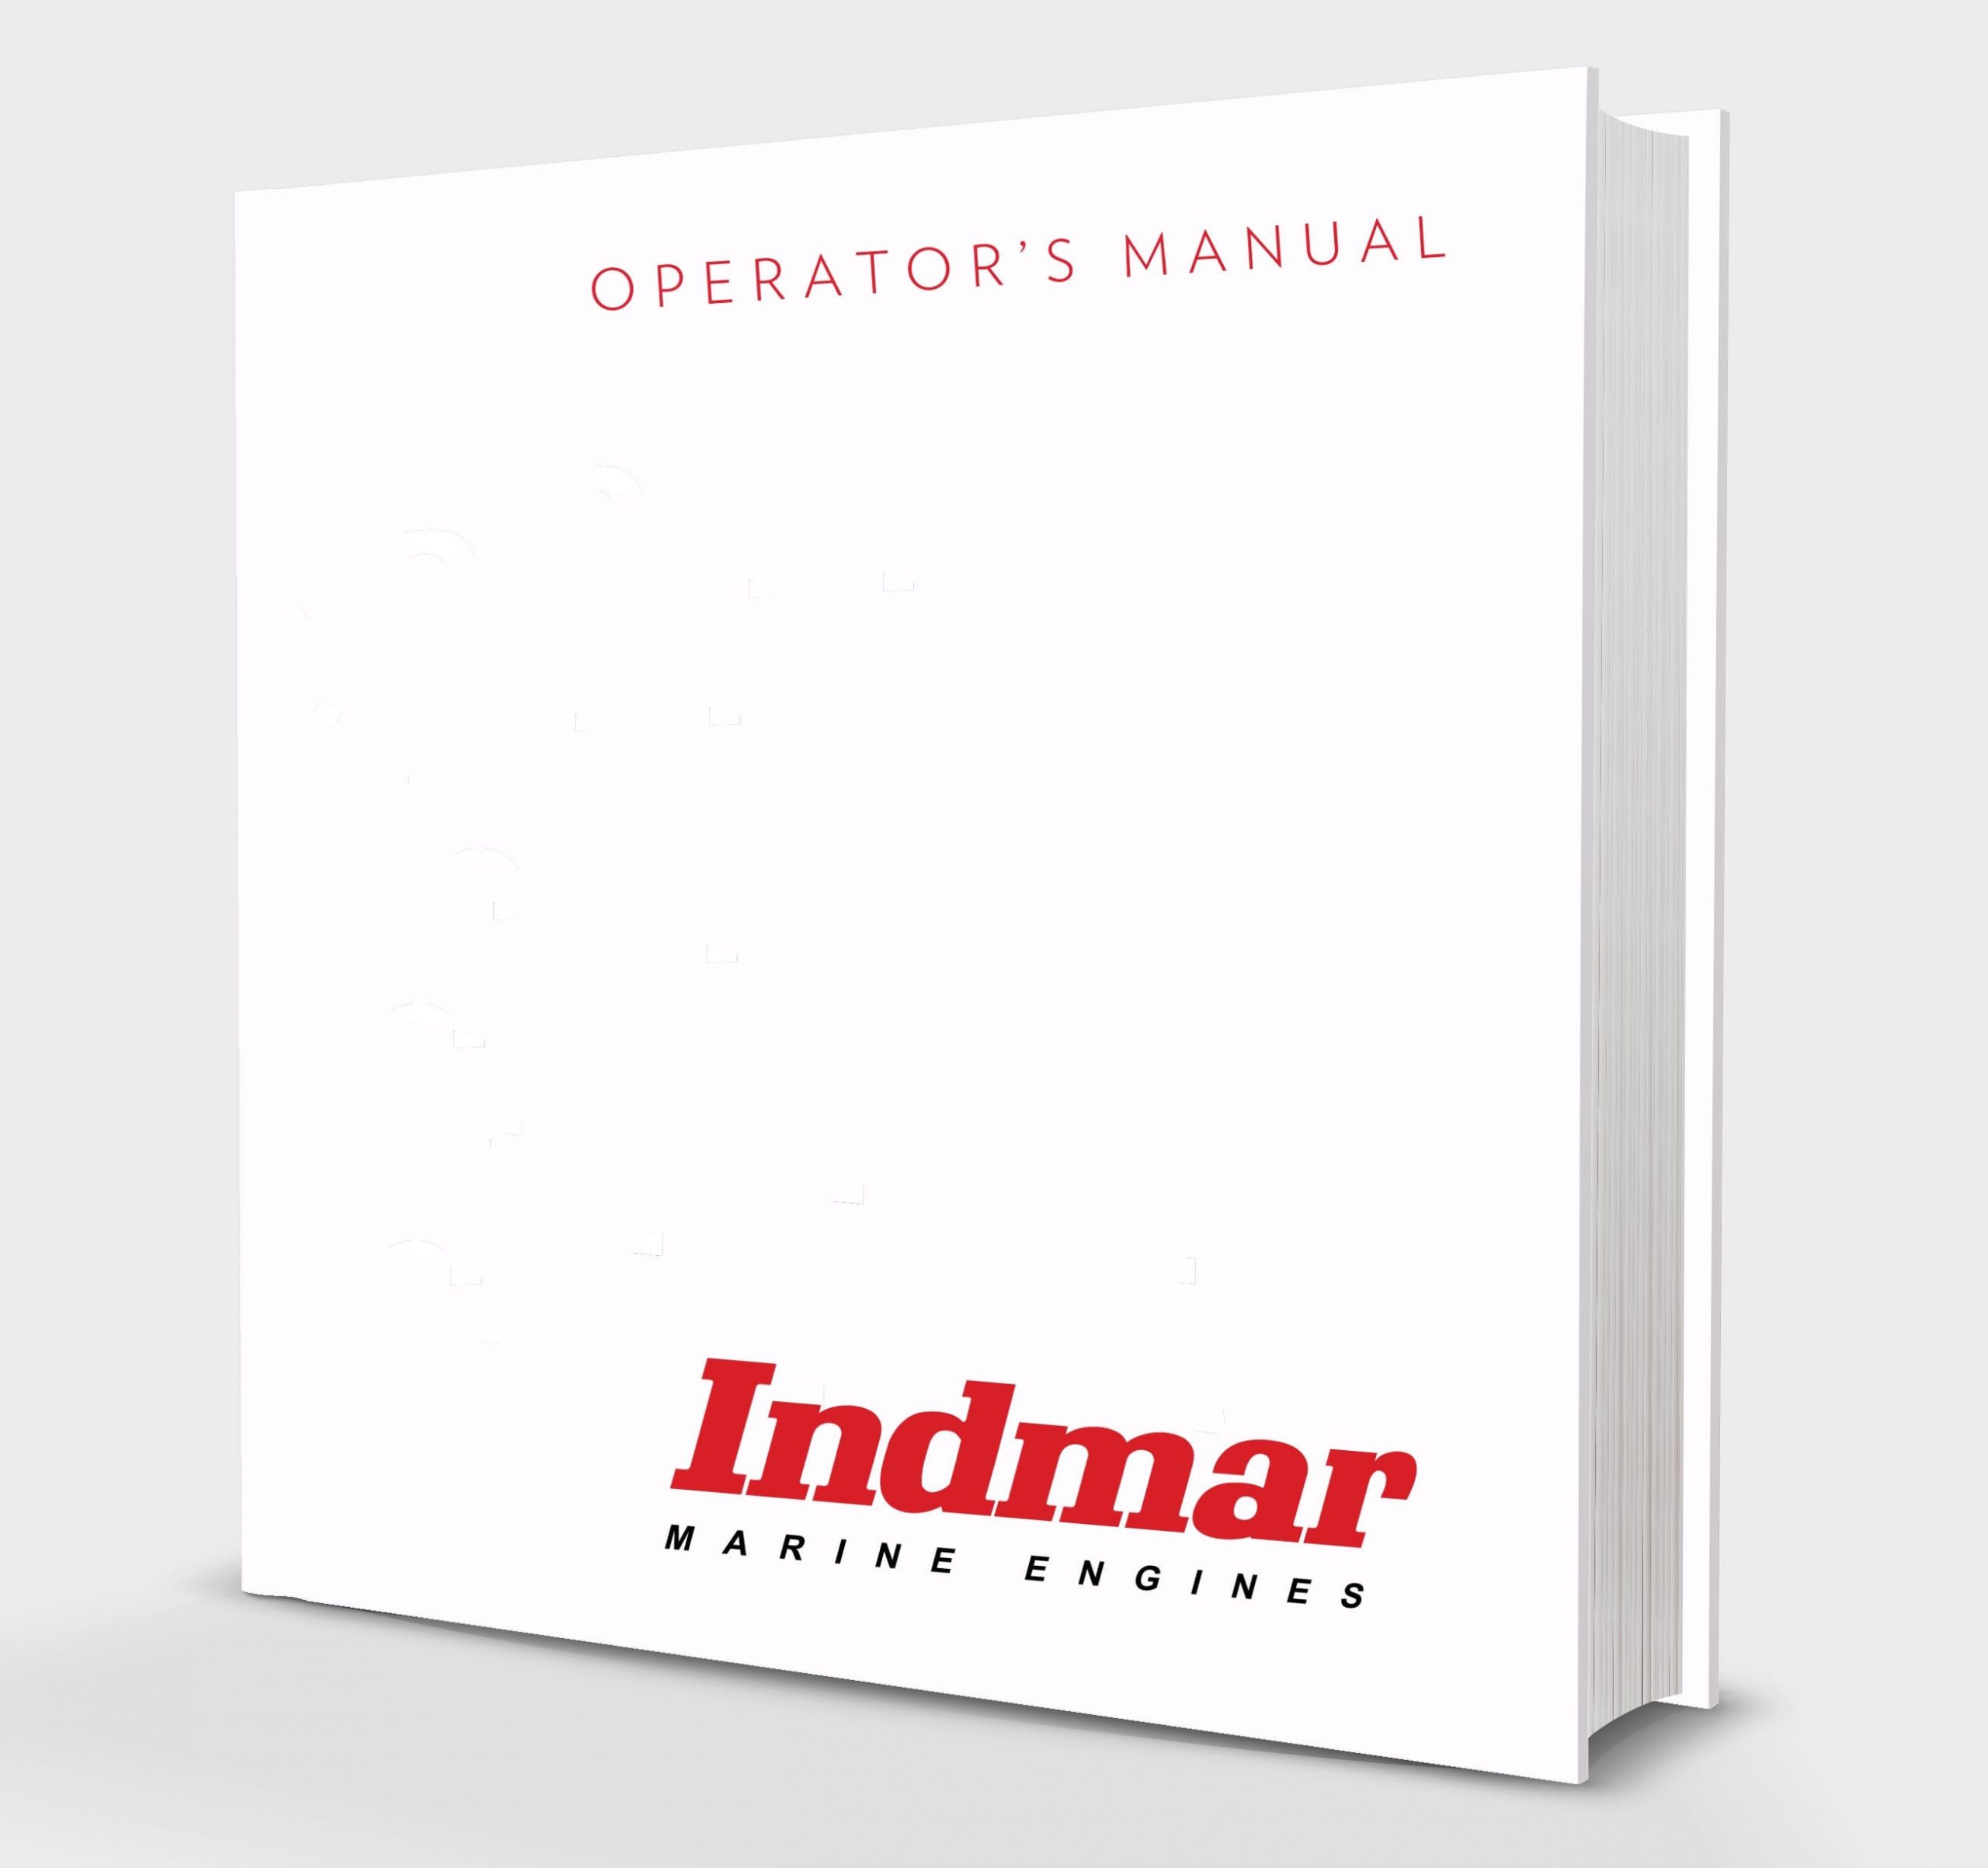 Give Me the Manual 08 Malibu Operator Manuals – Indmar Products Of Give Me the Manual 08 Malibu